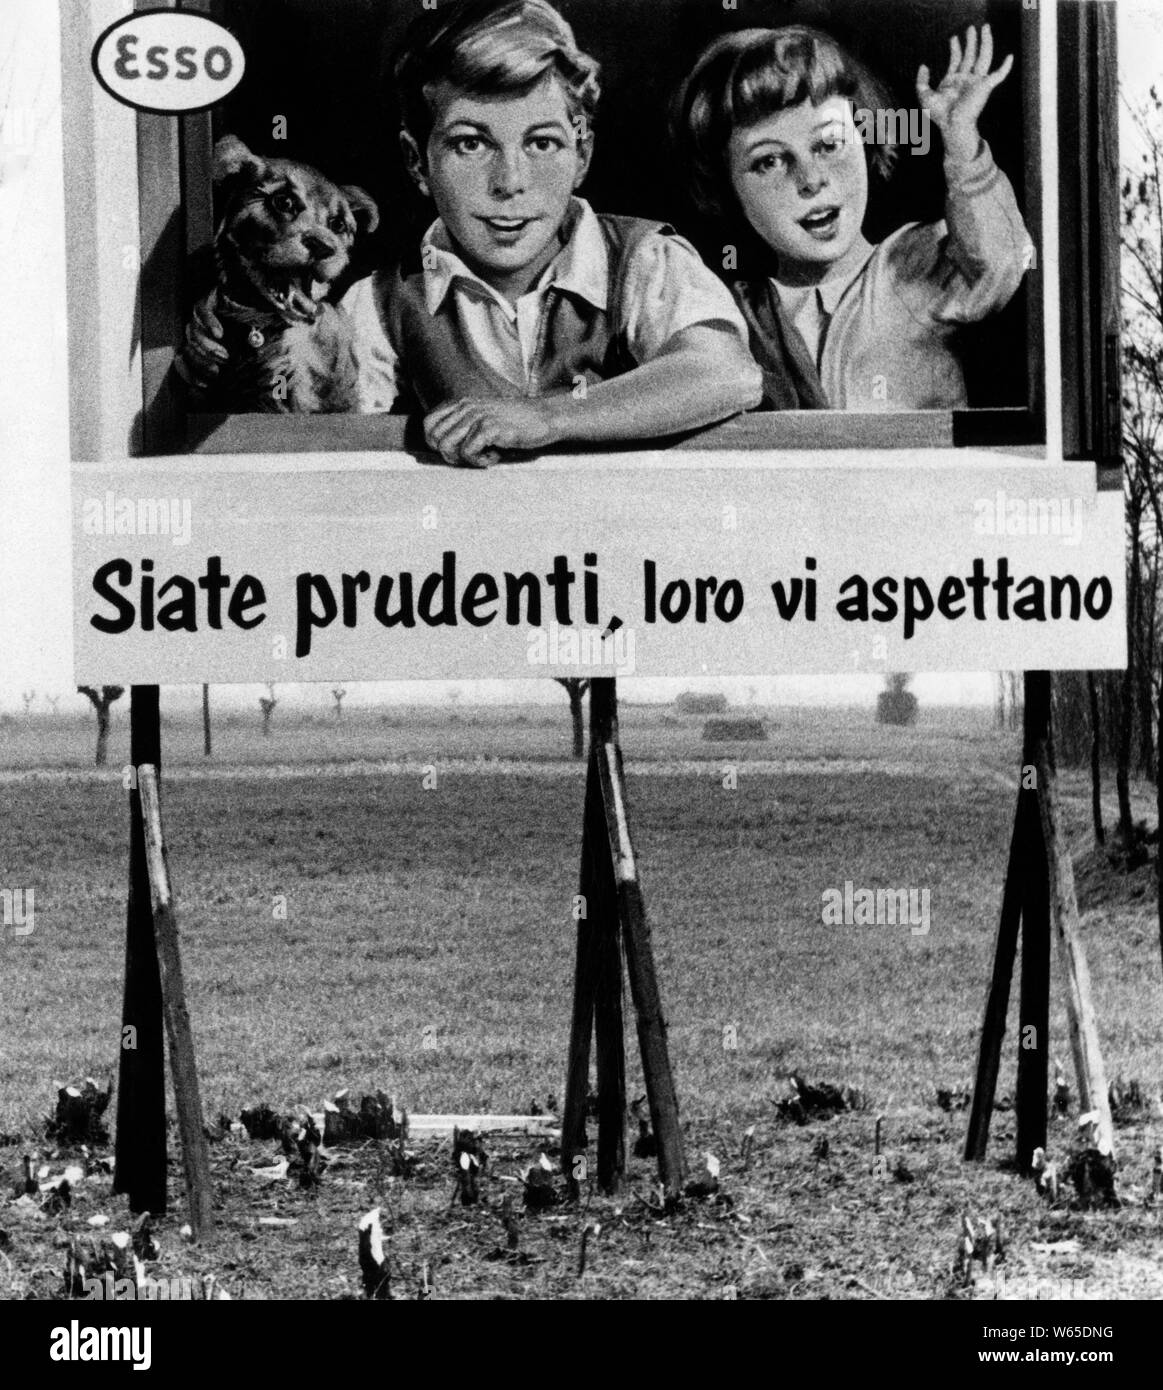 esso advertising billboard, Italy 1958 Stock Photo